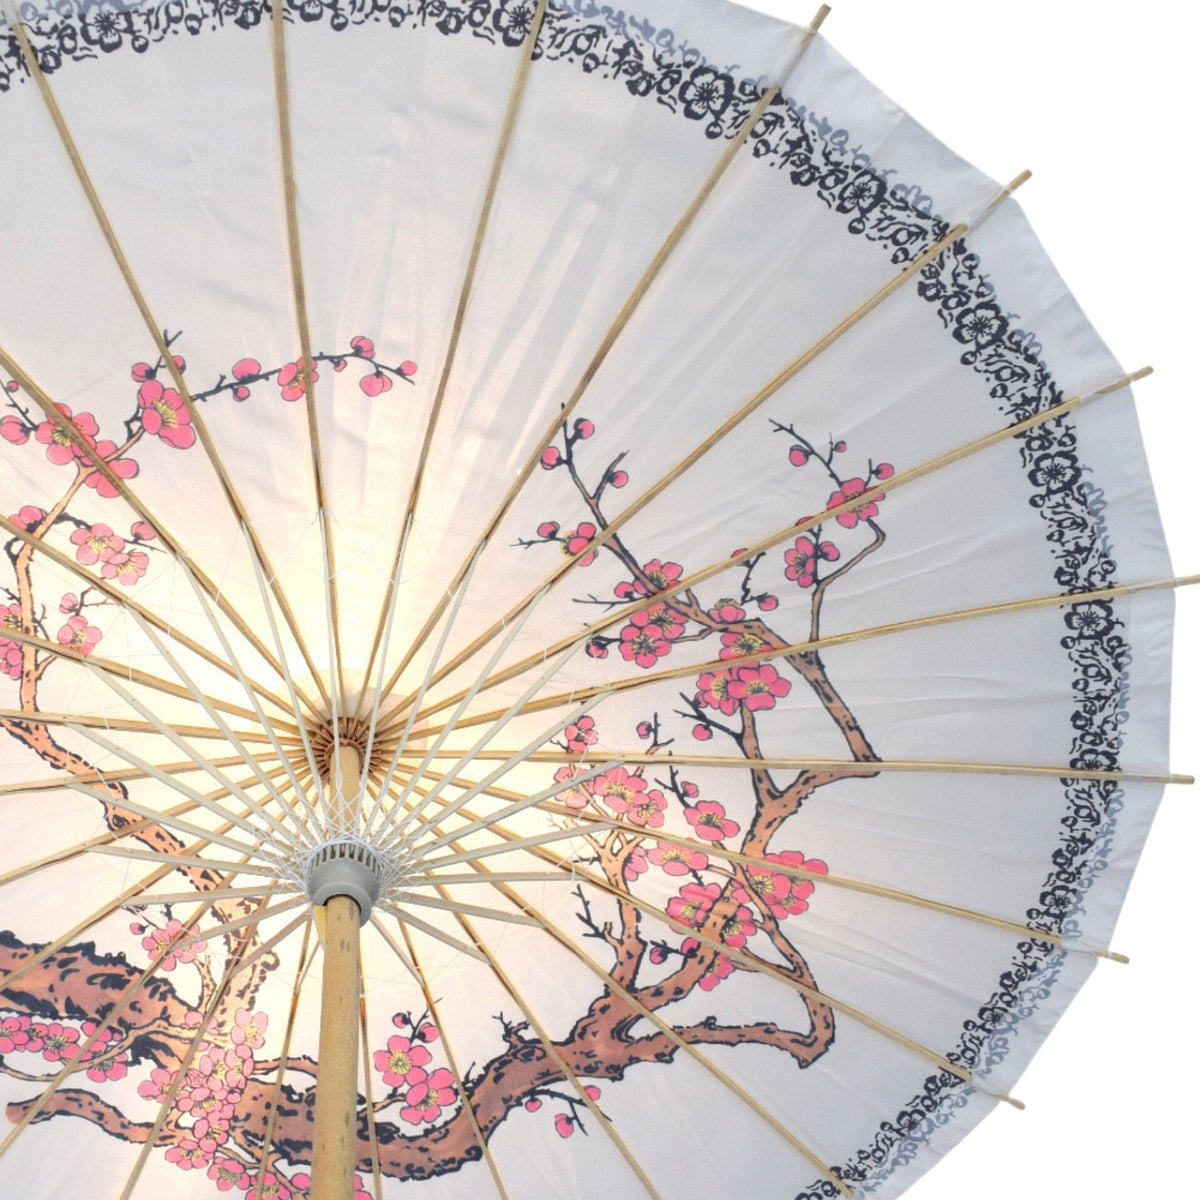 32&quot; Cherry Blossom with Floral Ring Premium Nylon Parasol Umbrella with Elegant Handle